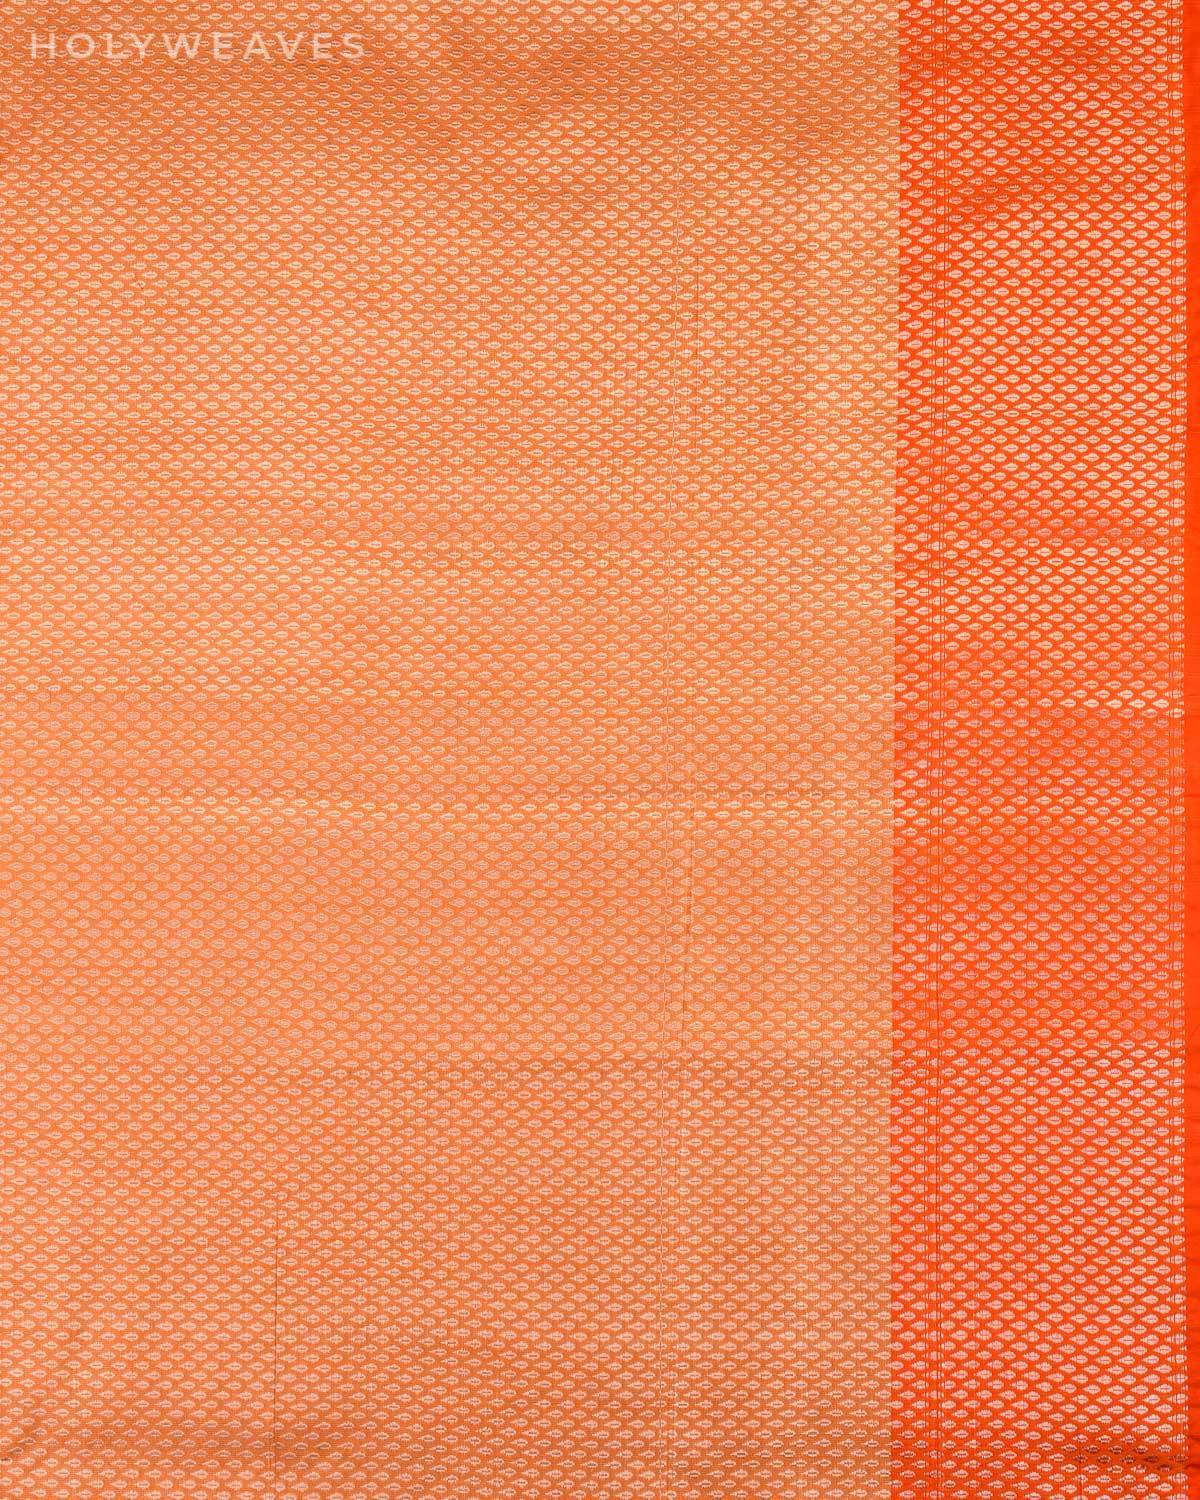 Metallic Beige Banarasi Khichha Cutwork Brocade Woven Cotton Tissue Saree with Contrast Orange Border - By HolyWeaves, Benares